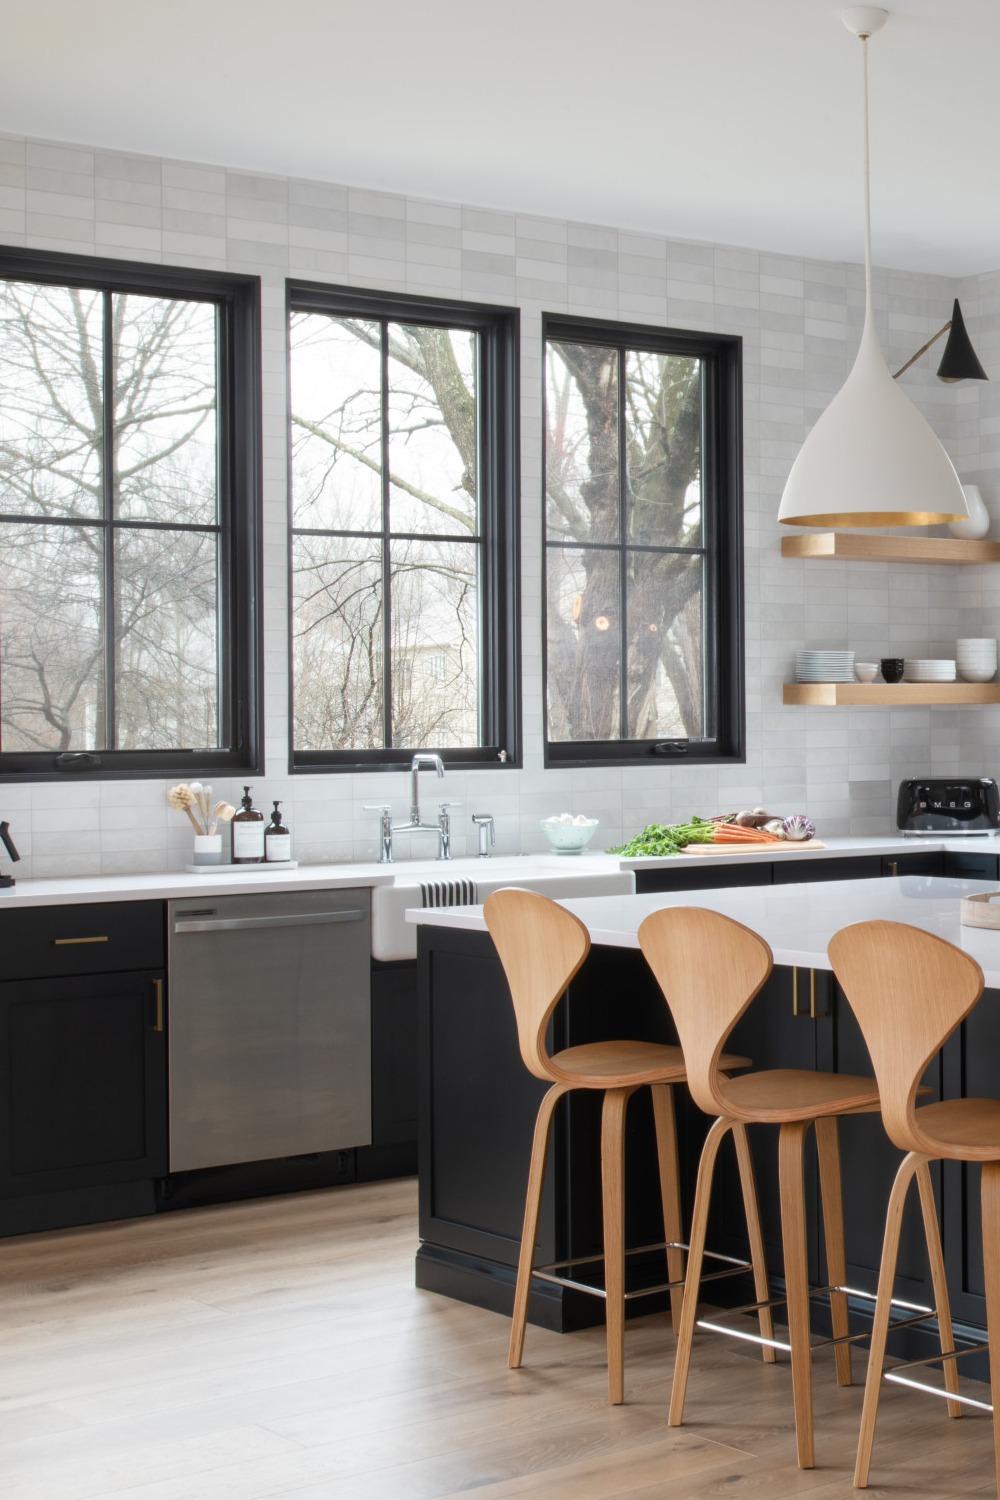 Dark Countertops Light Wood Floors No Upper Cabinets Paneled Appliances Modern Kitchens